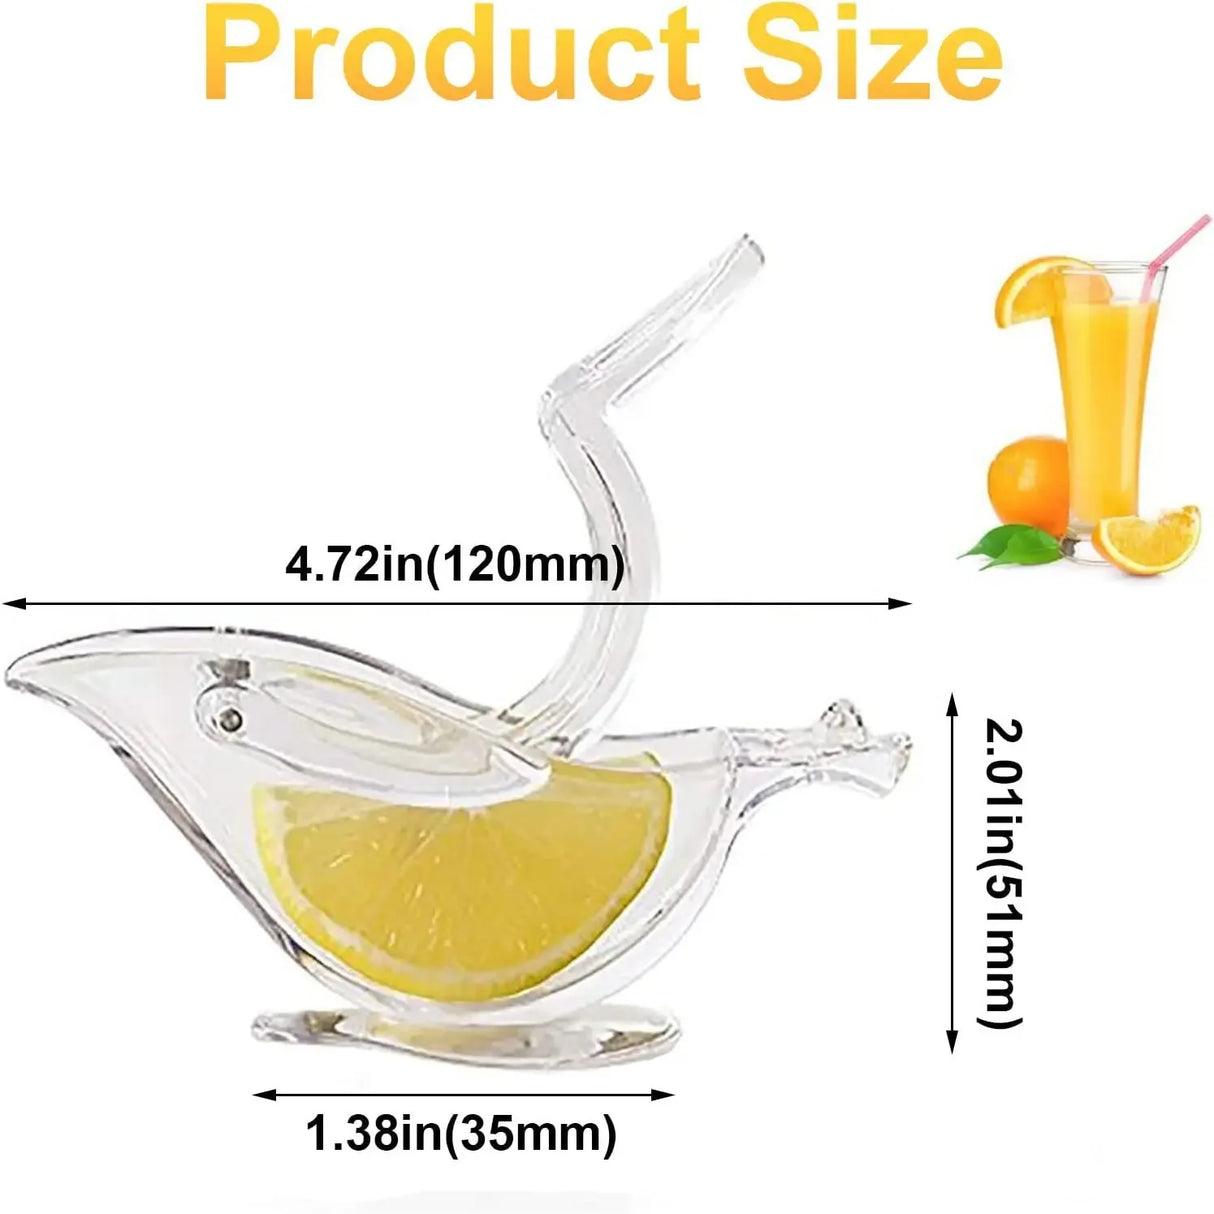 Bird-Inspired Manual Lemon Squeezer with Portable Acrylic Design